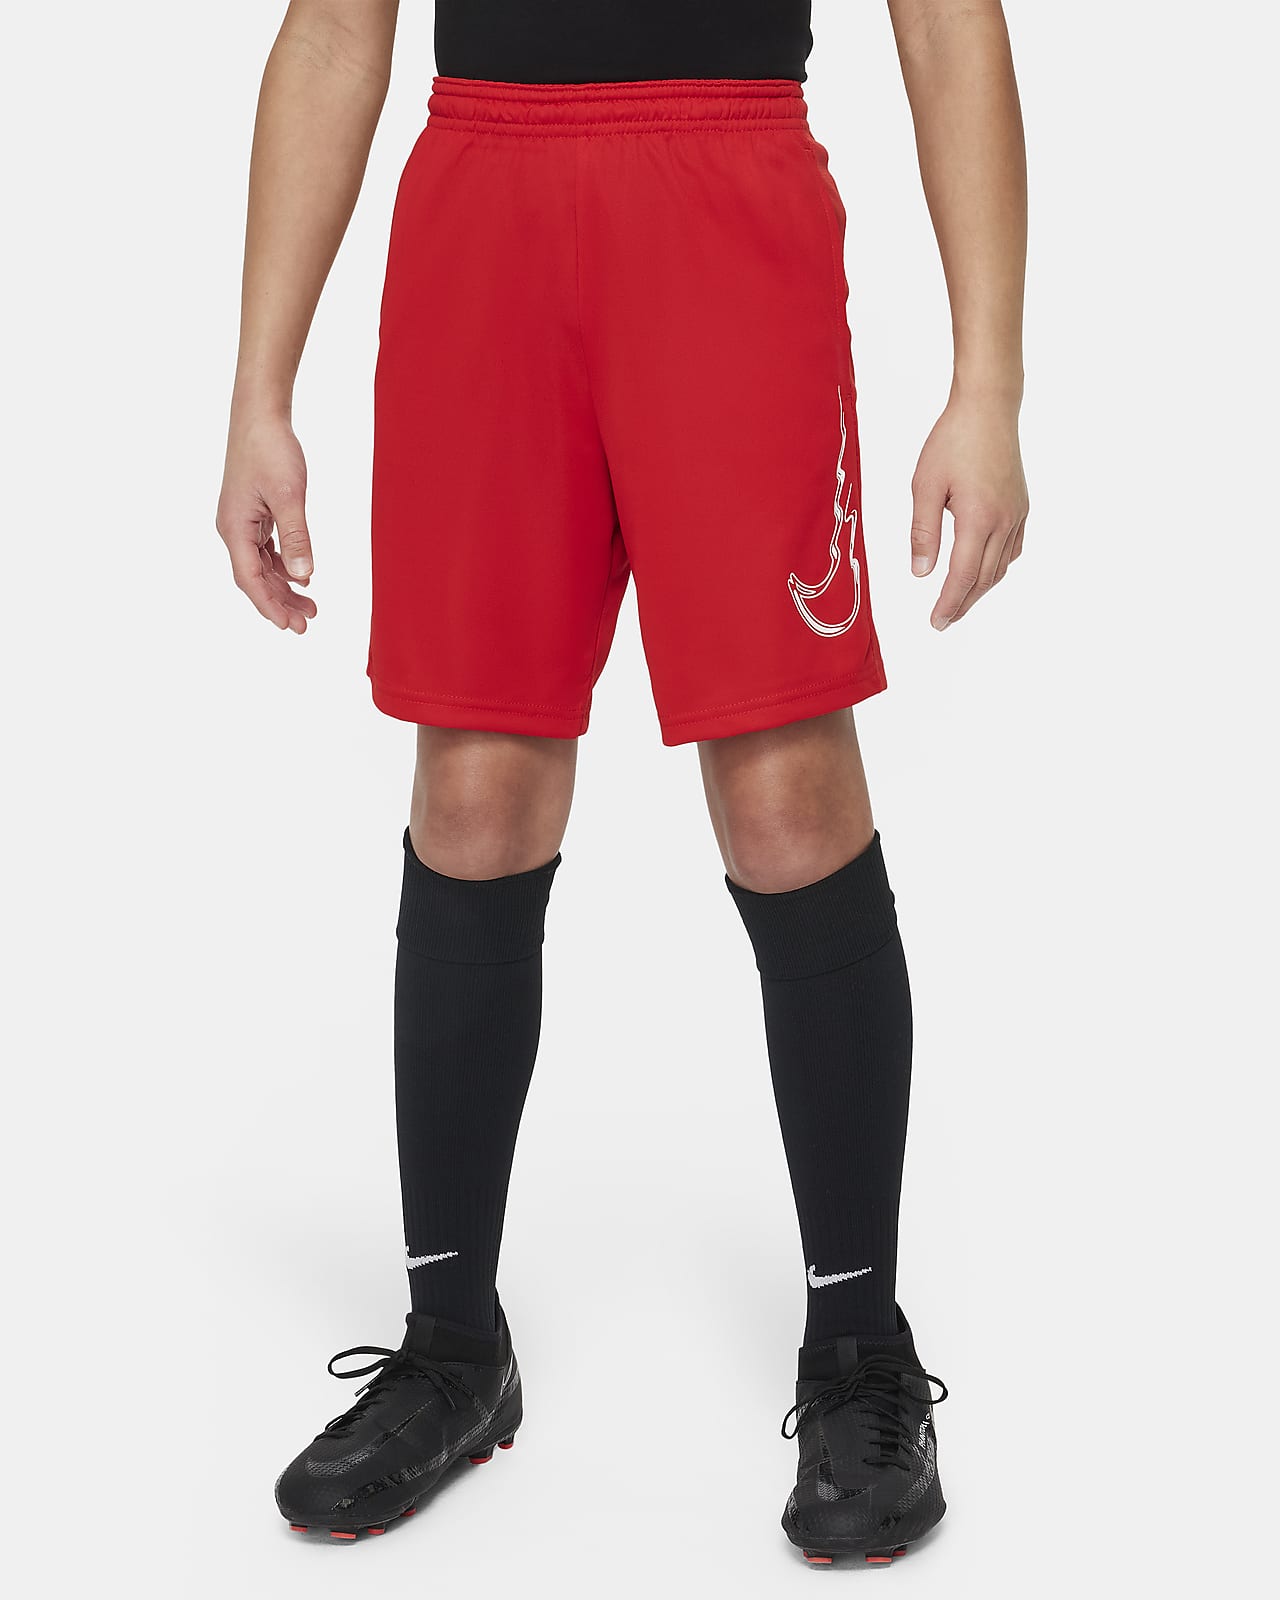 Kids Basketball Trousers & Tights. Nike LU